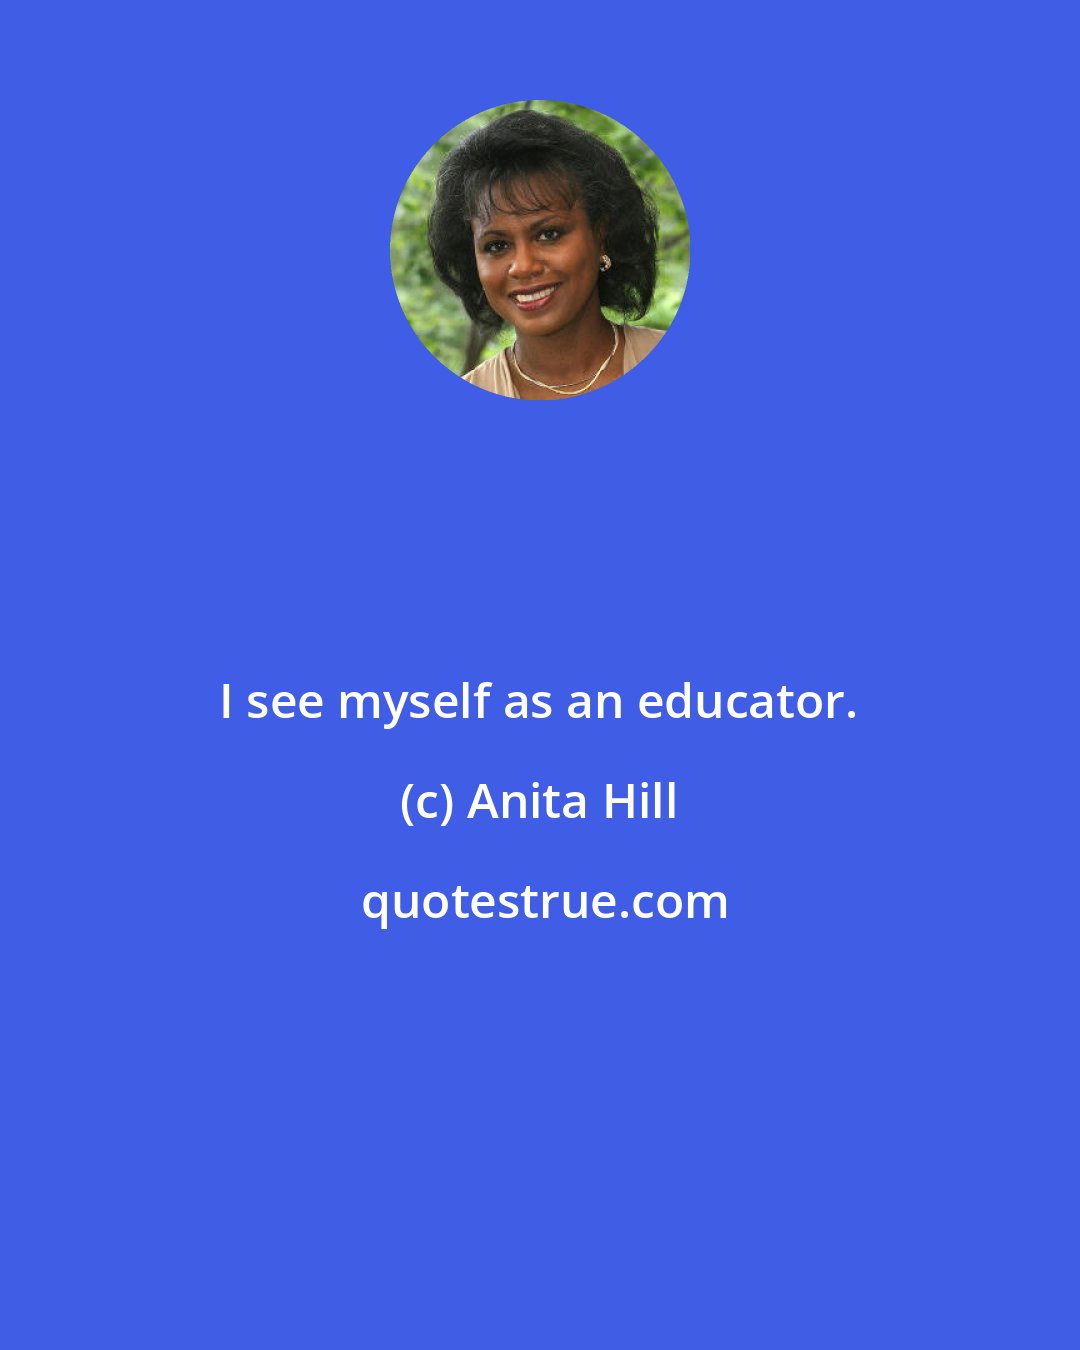 Anita Hill: I see myself as an educator.